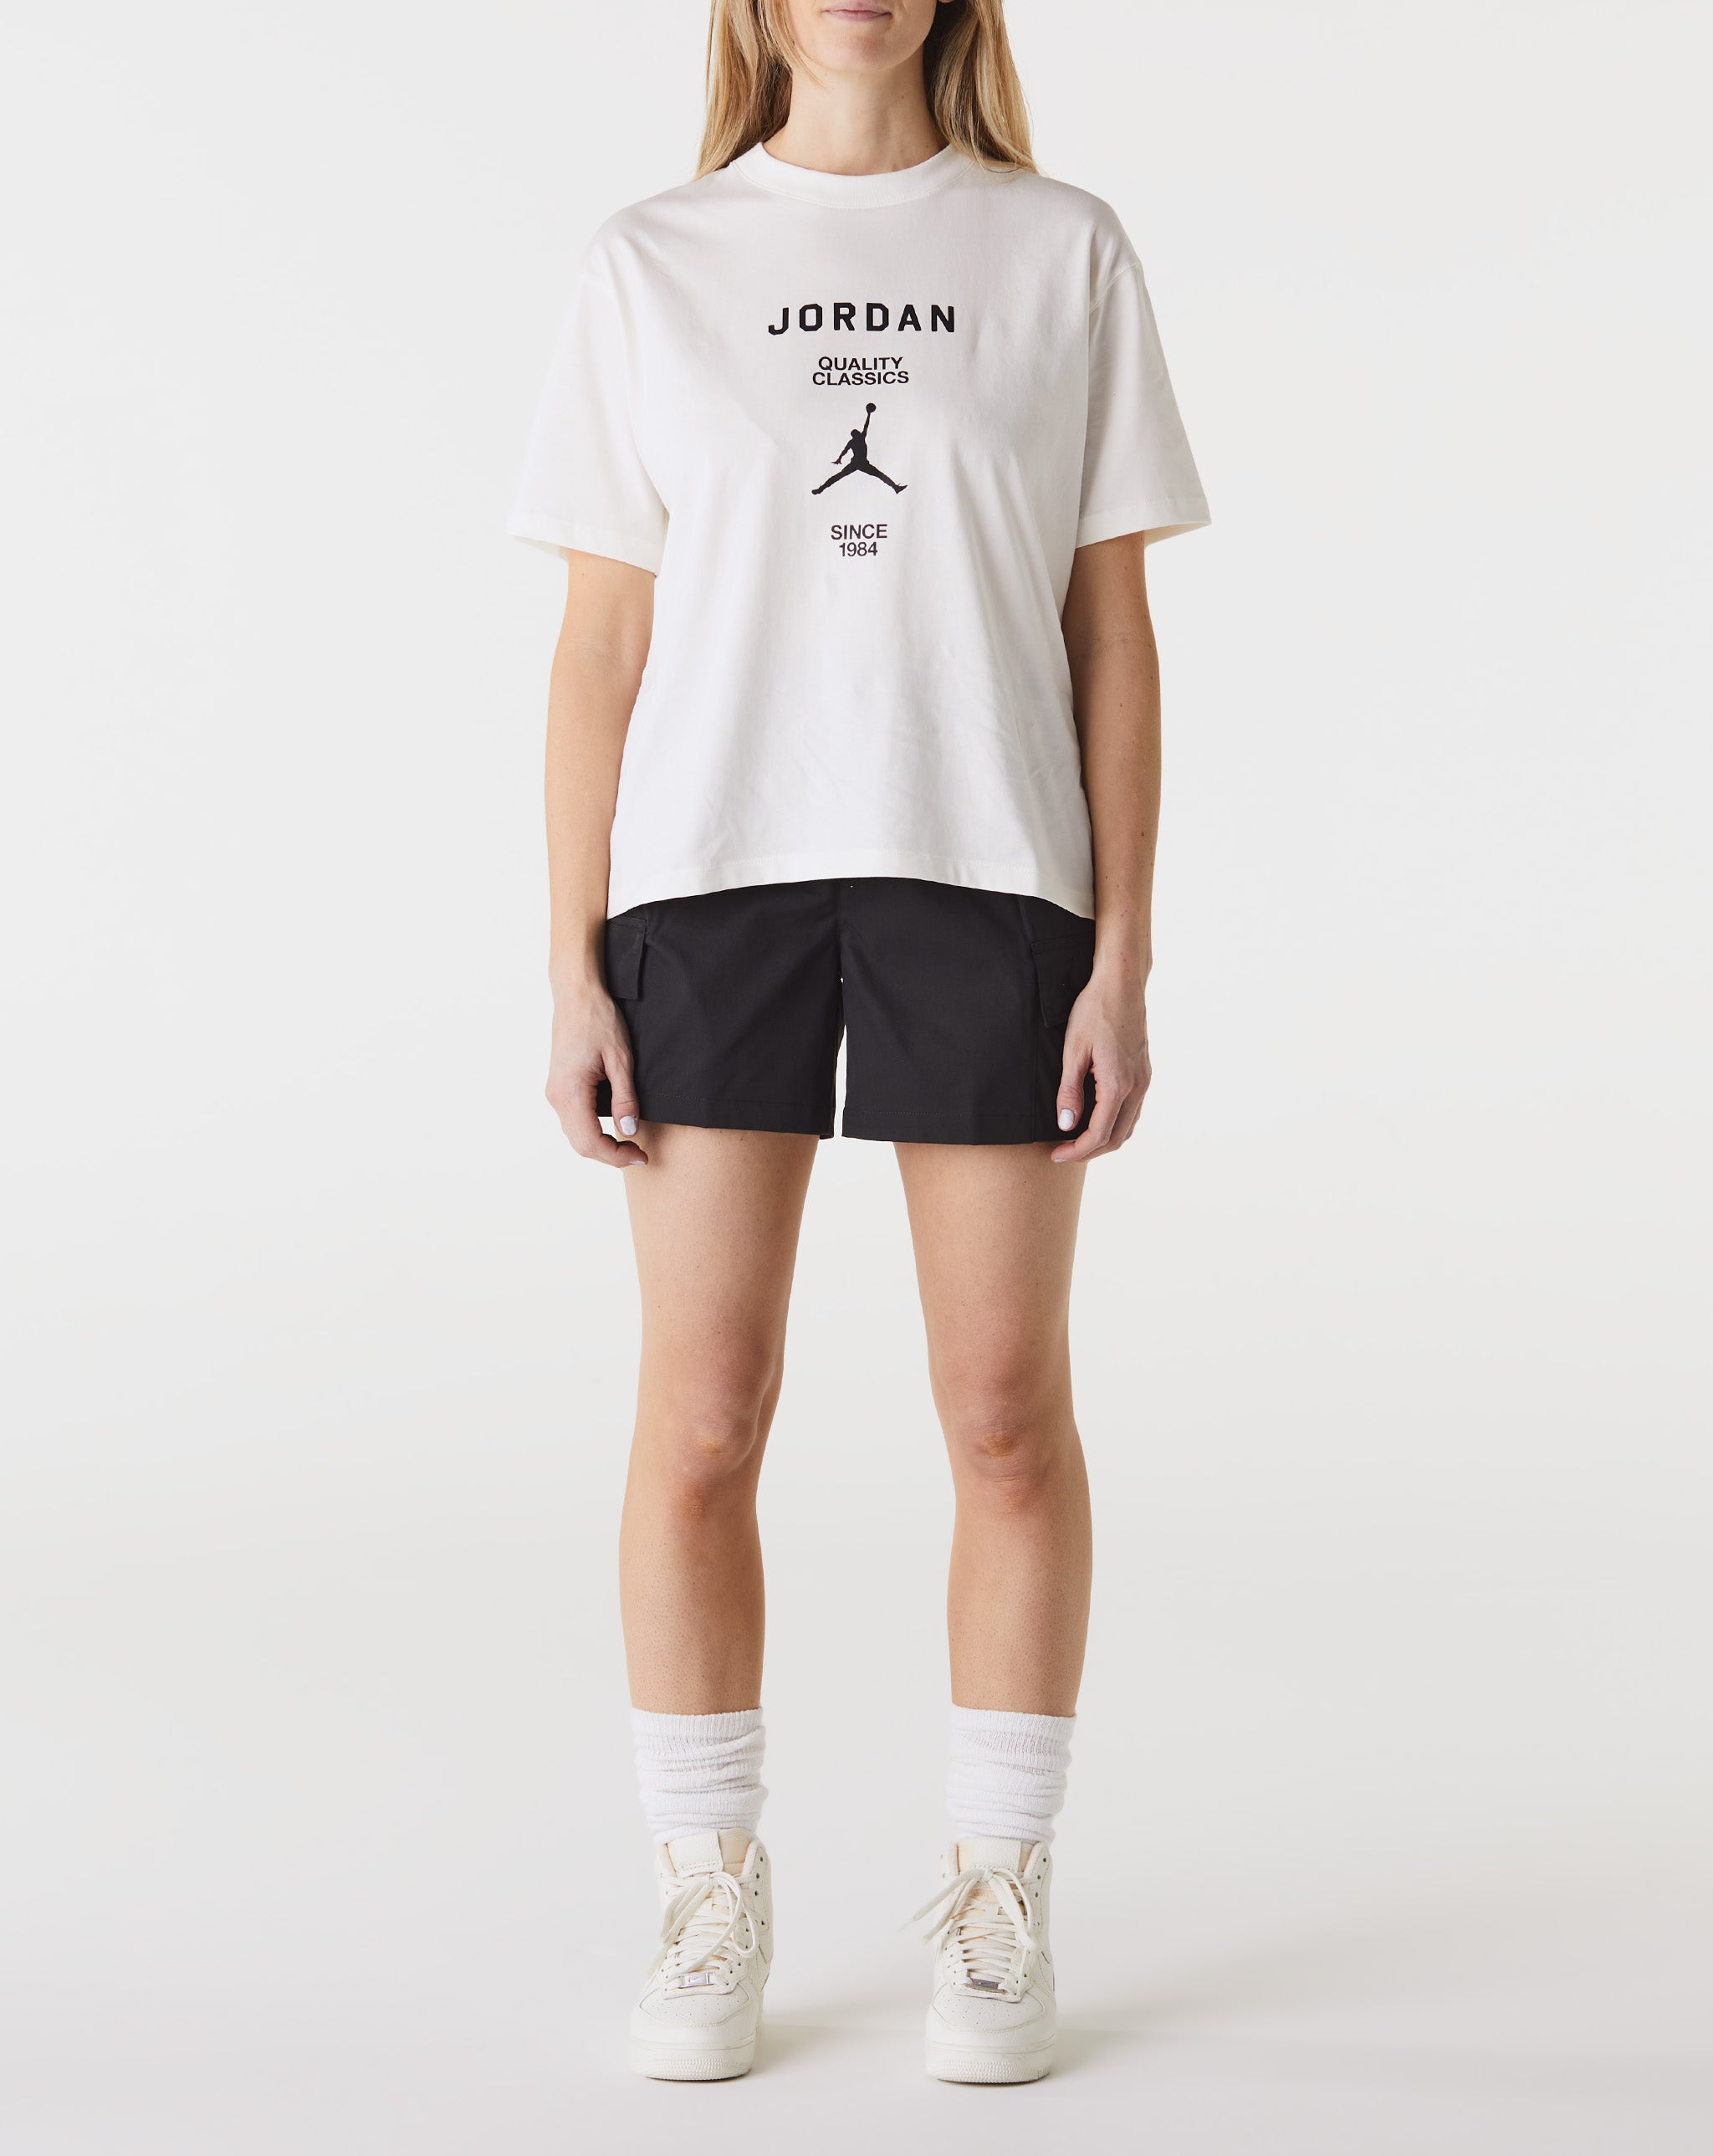 Air Jordan Women's Jordan Quality Classics T-Shirt  - Cheap Urlfreeze Jordan outlet